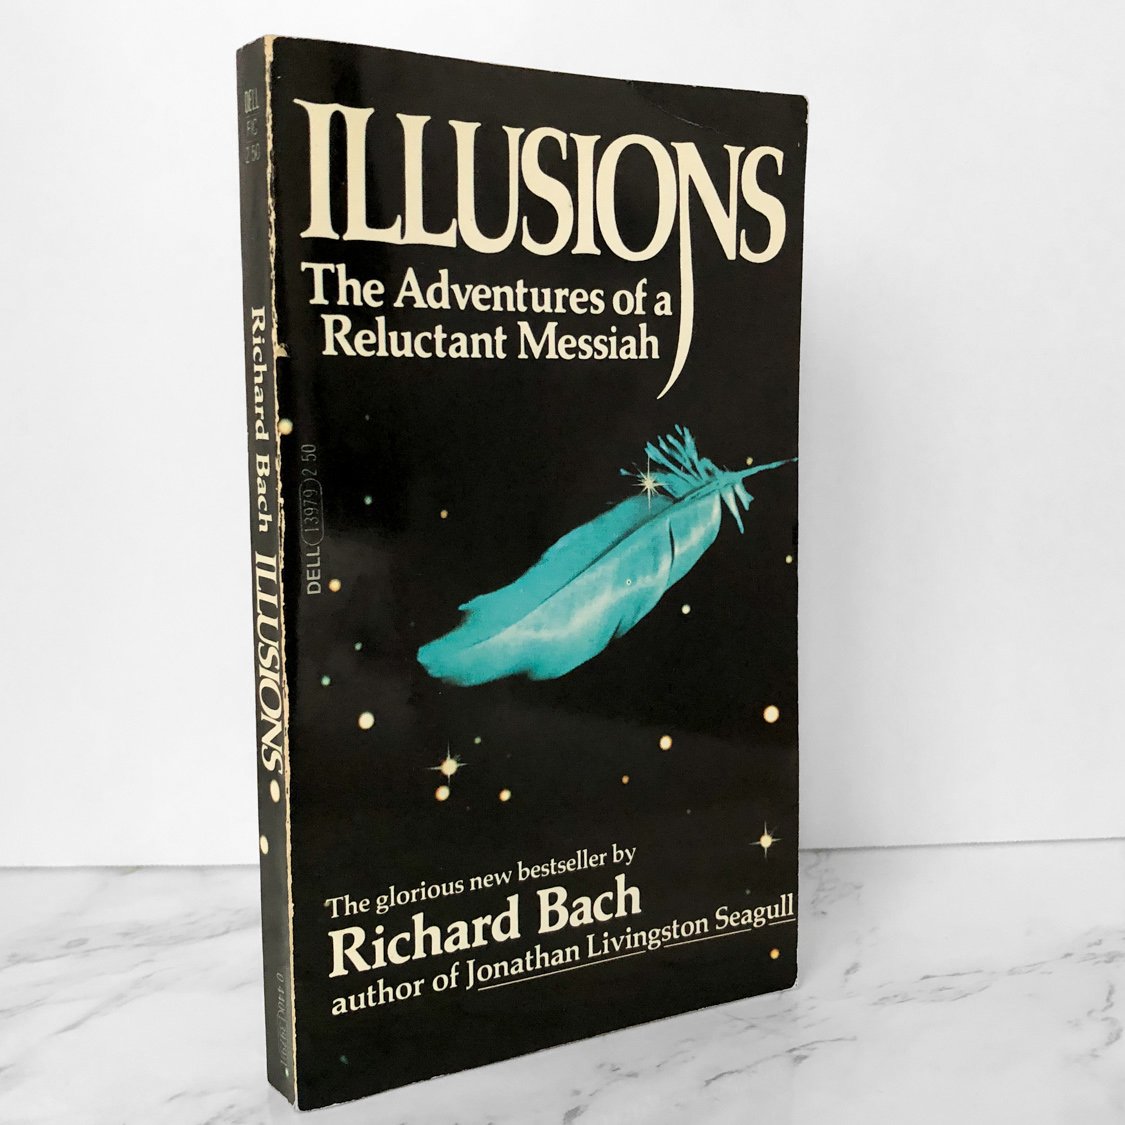 “Illusions,” by Richard Bach